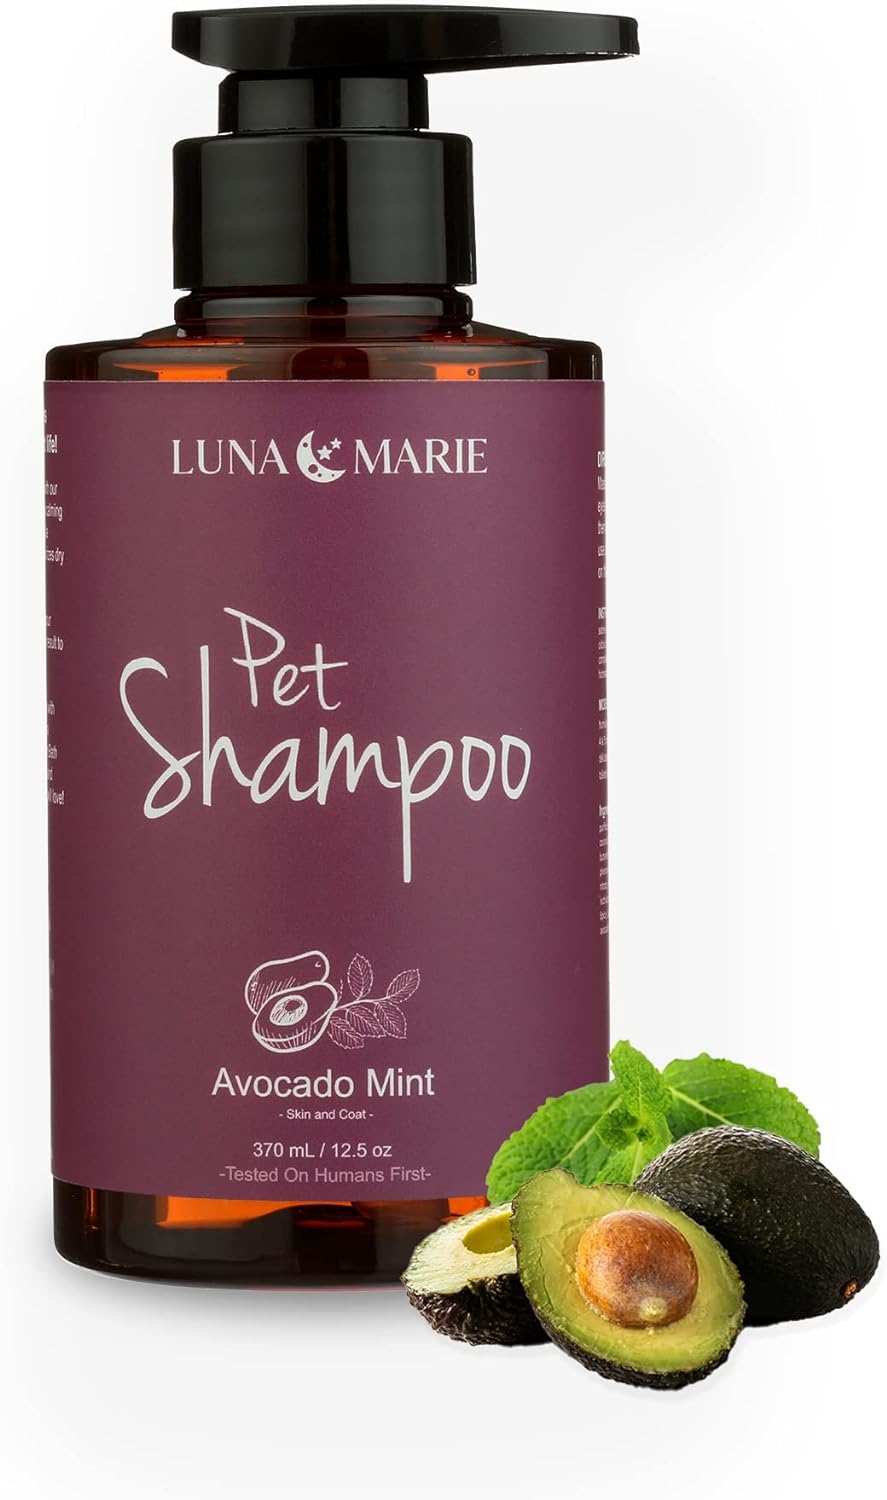 LunaMarie Avocado Mint Pet Shampoo